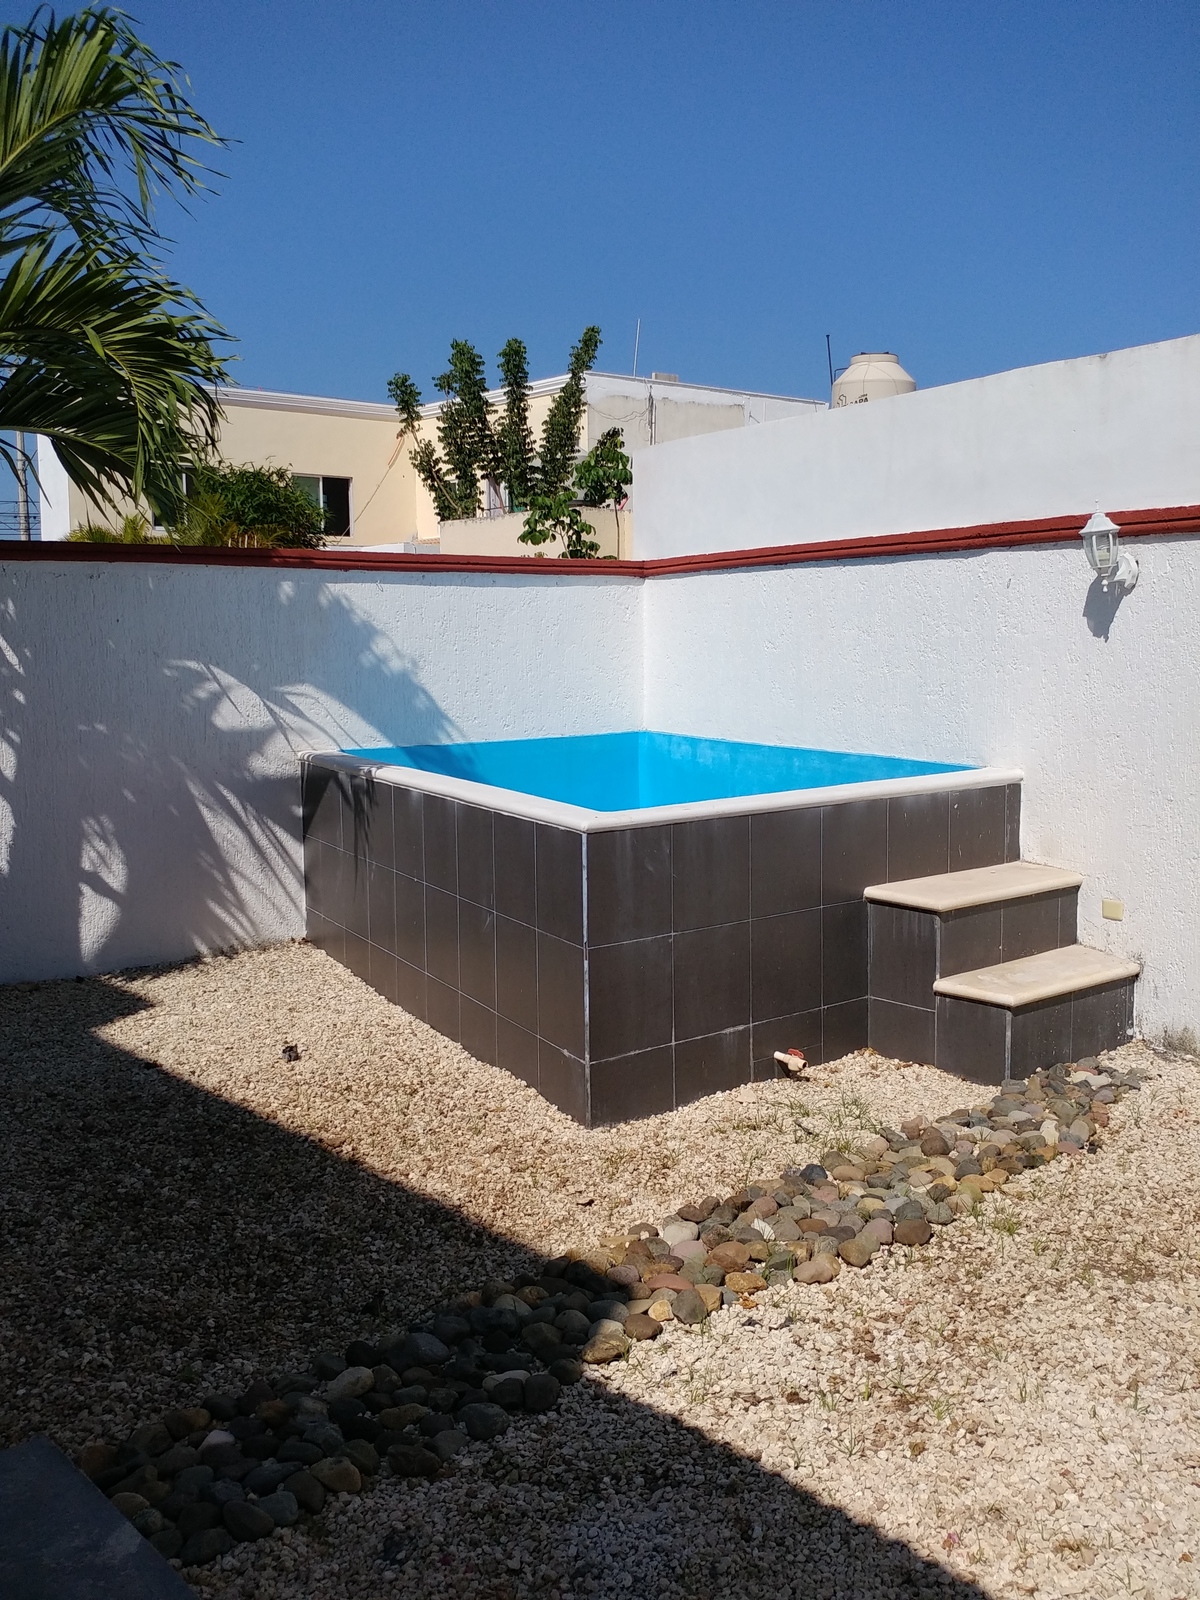 Rento casa con piscina, col. Montecarlo, Mérida Yuc